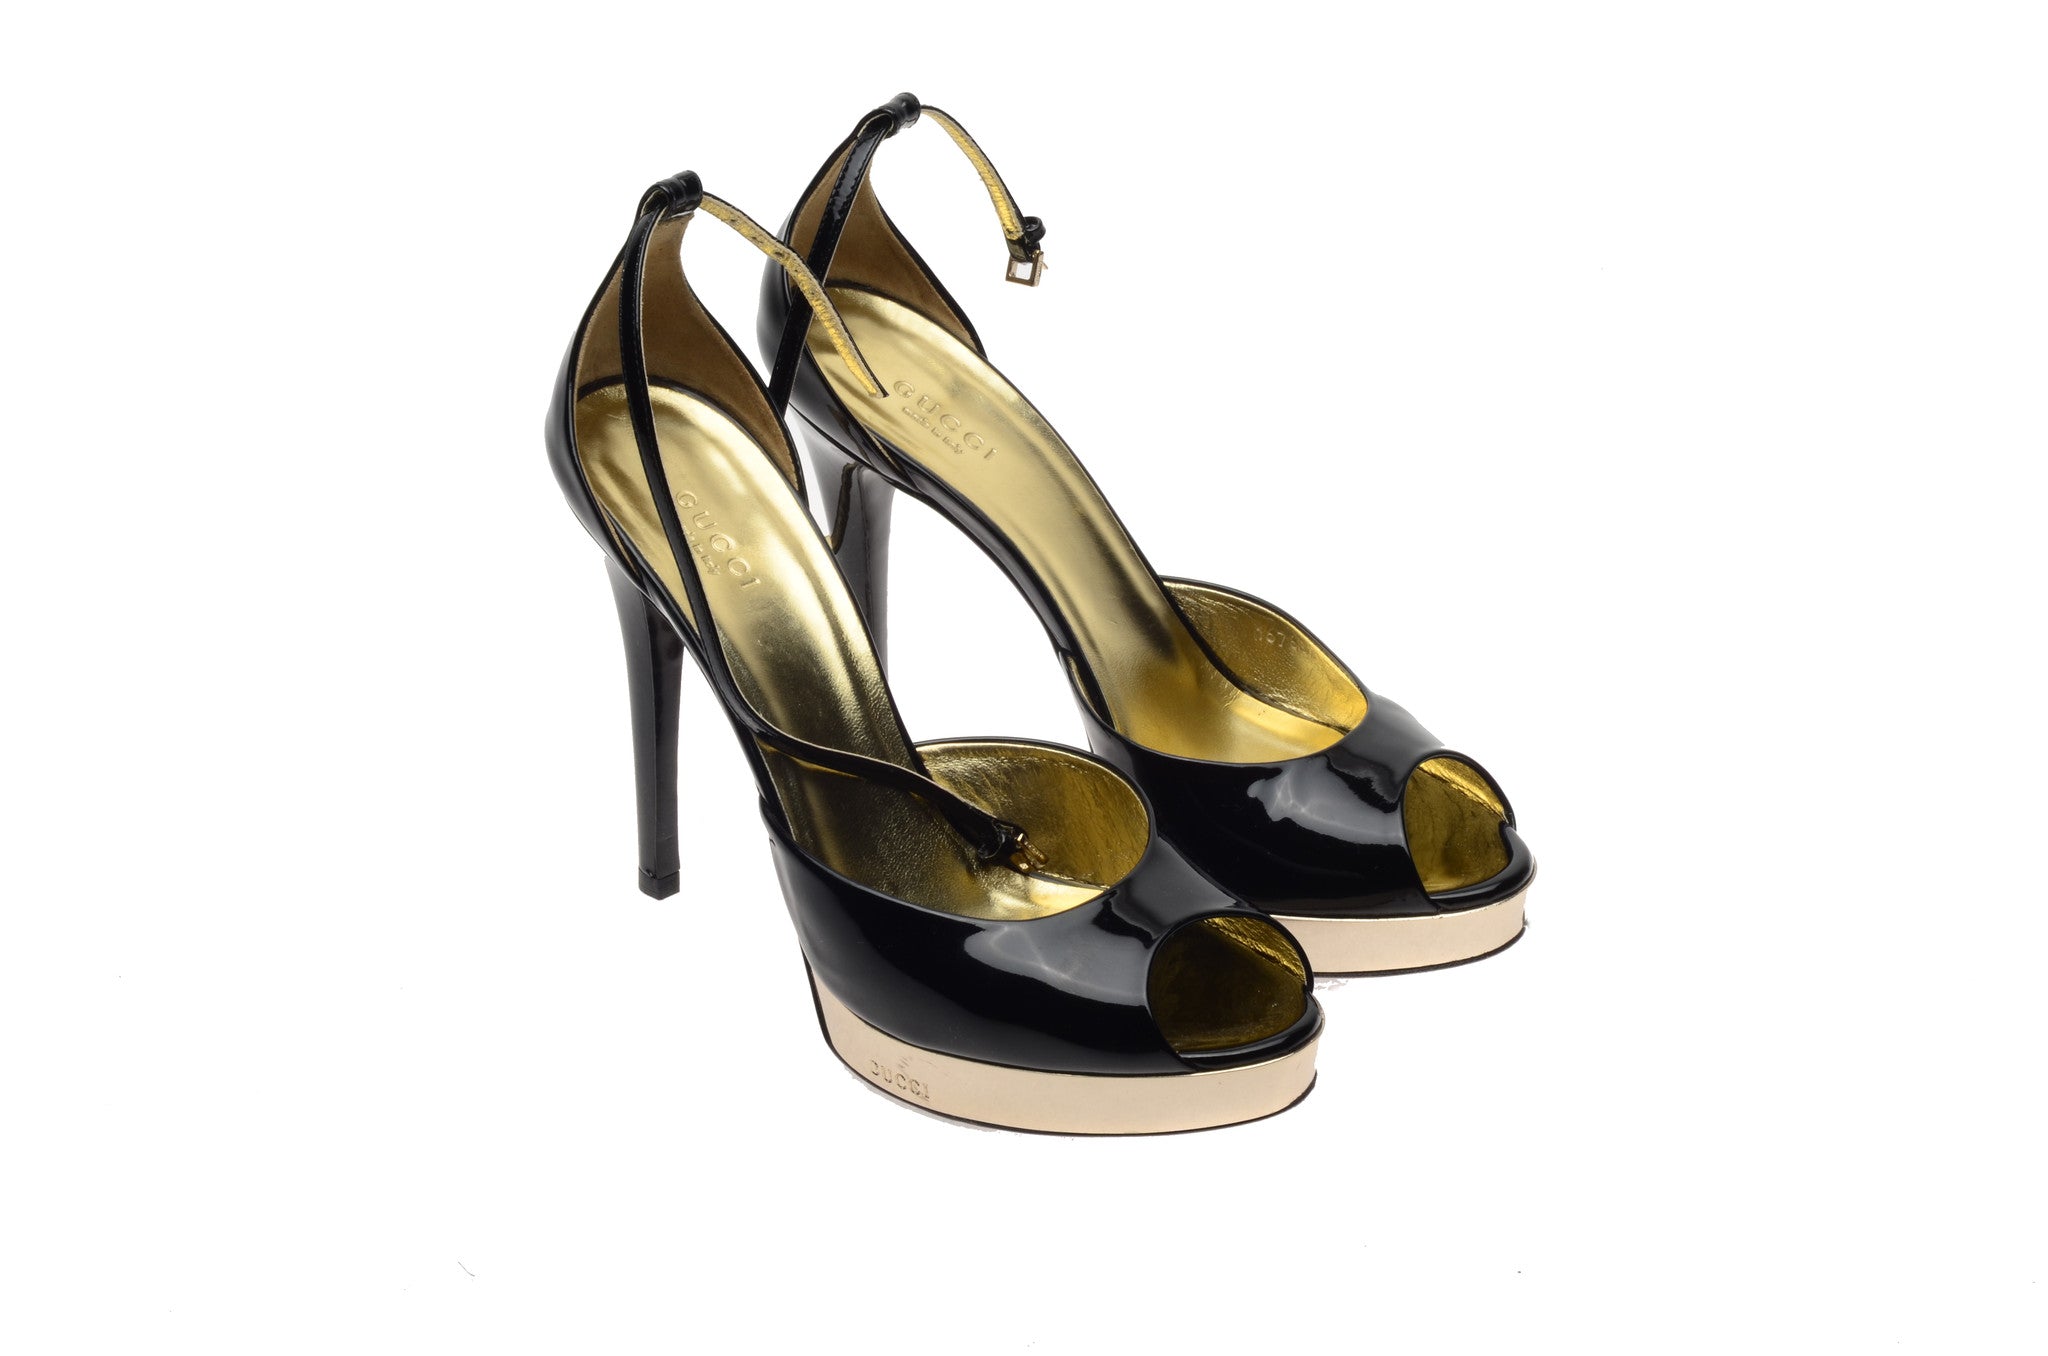 gucci black platform heels